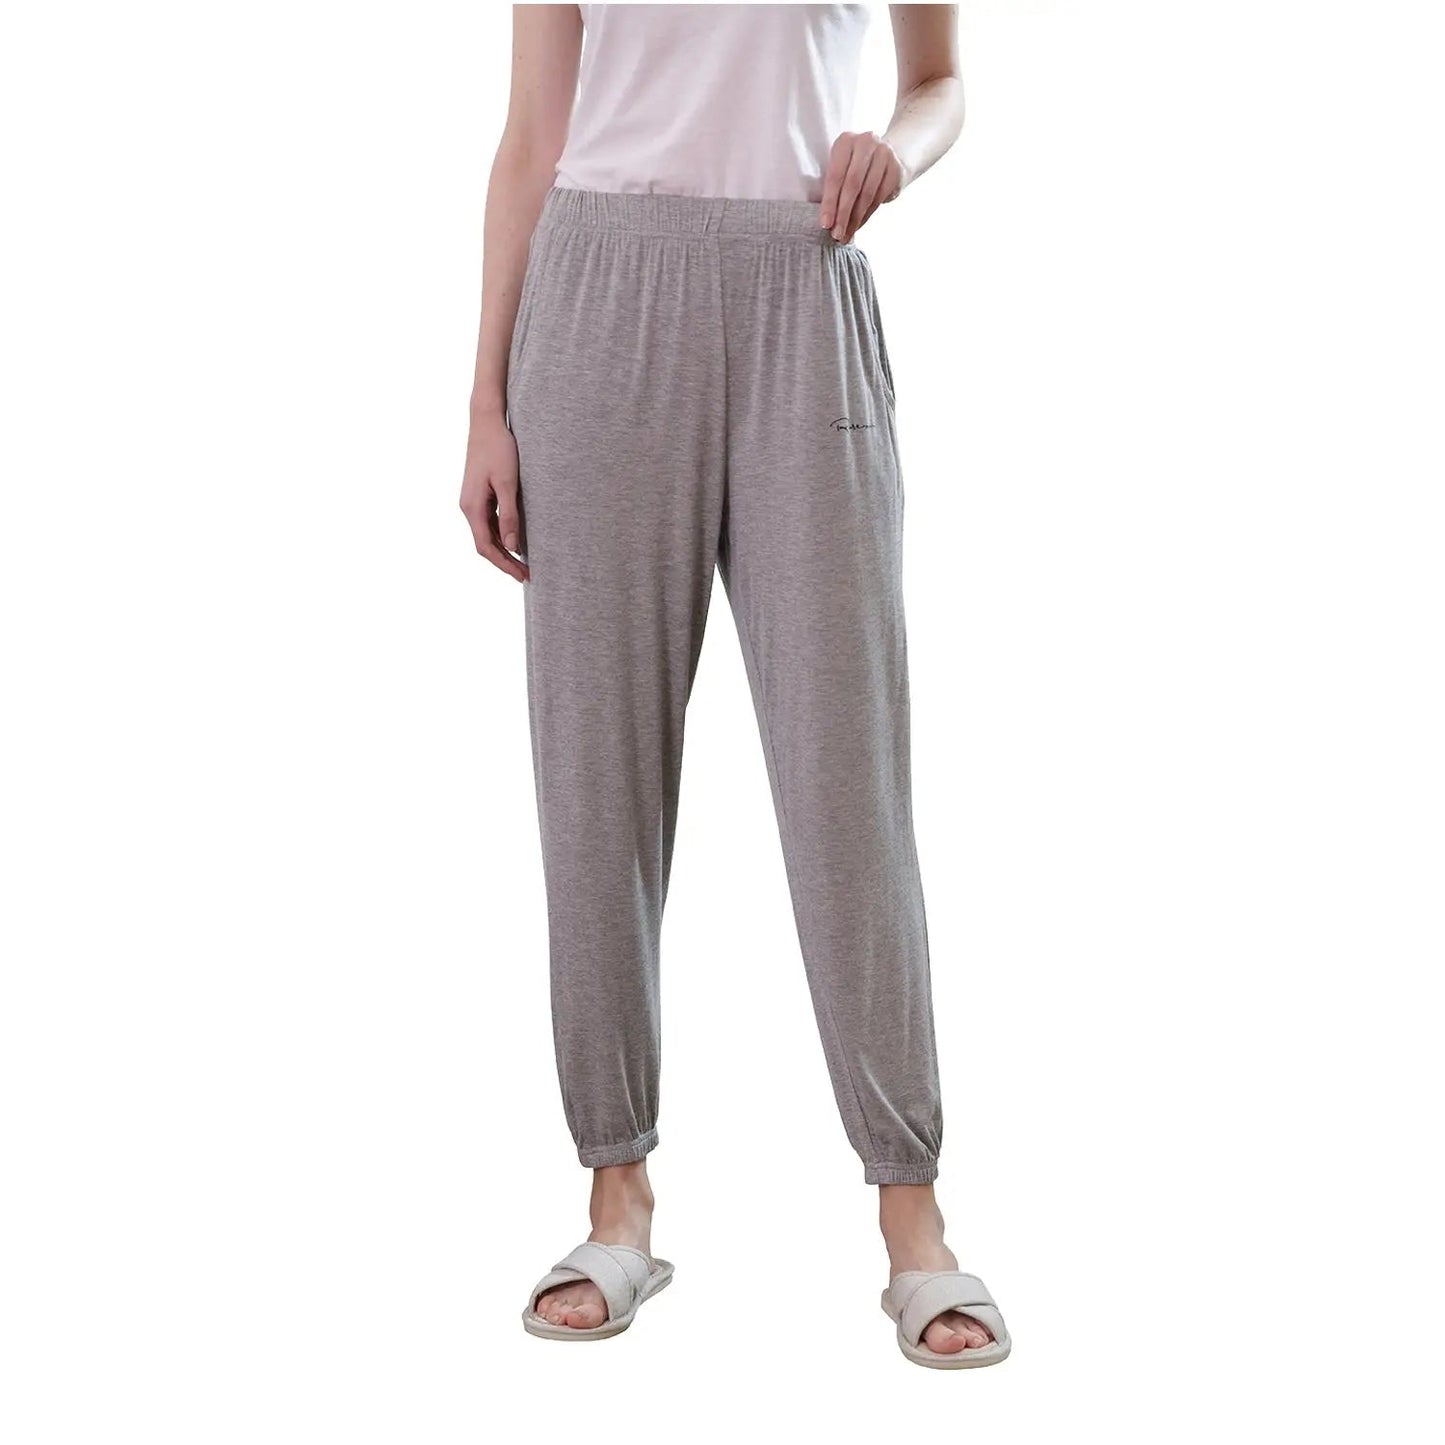 Womens Comfy Lounge Pants Knit Sleep Joggers Stretch Pajama Bottoms LANBAOSI